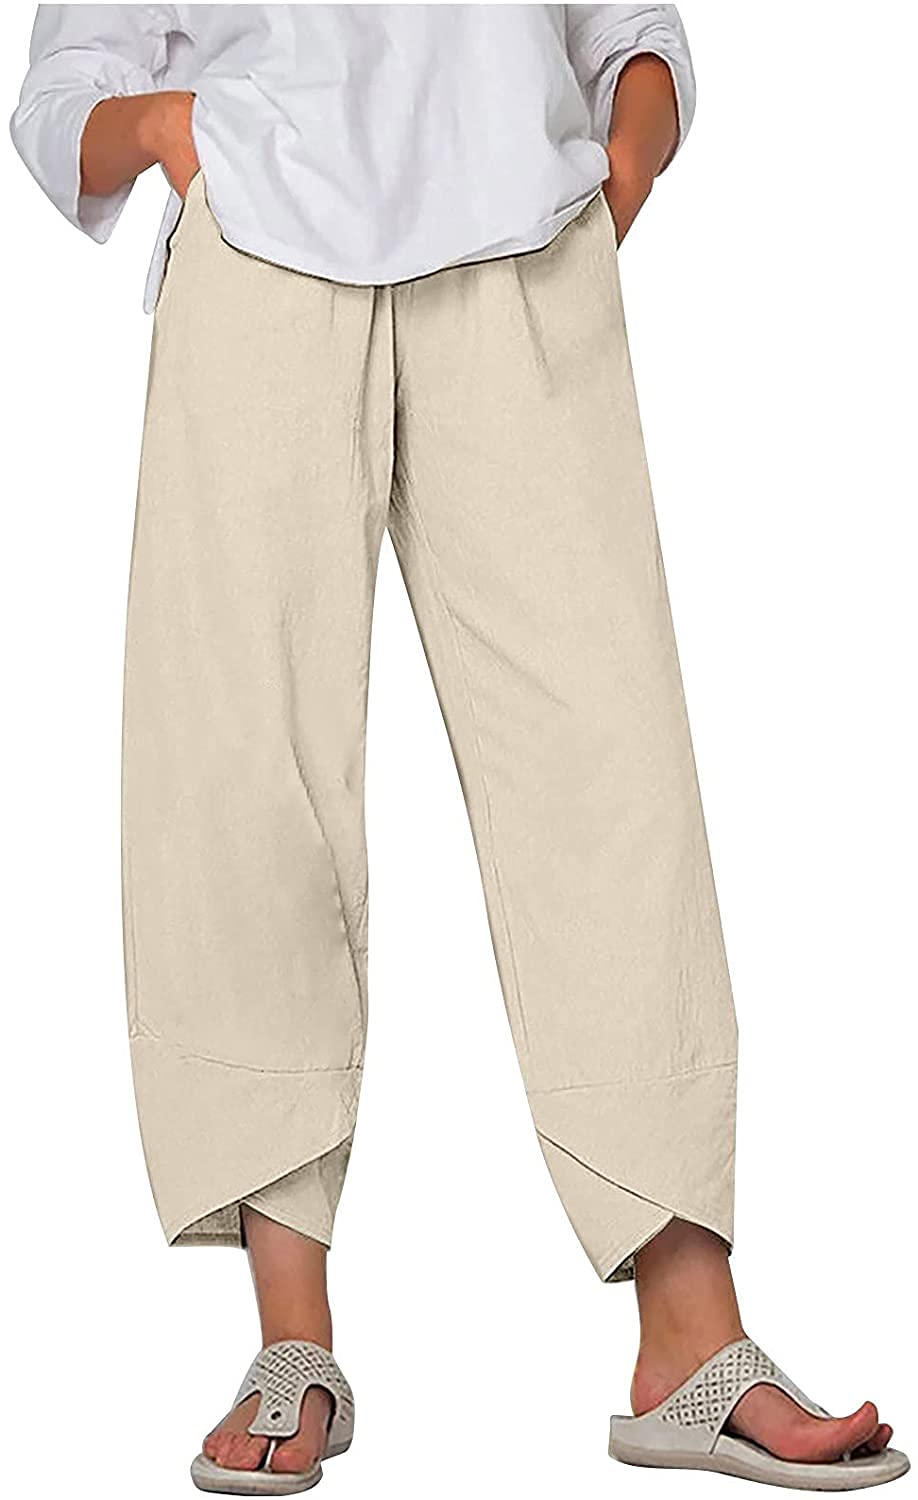 DLFE Summer Pants for Women Casual Pockets Cotton Linen Wide Leg